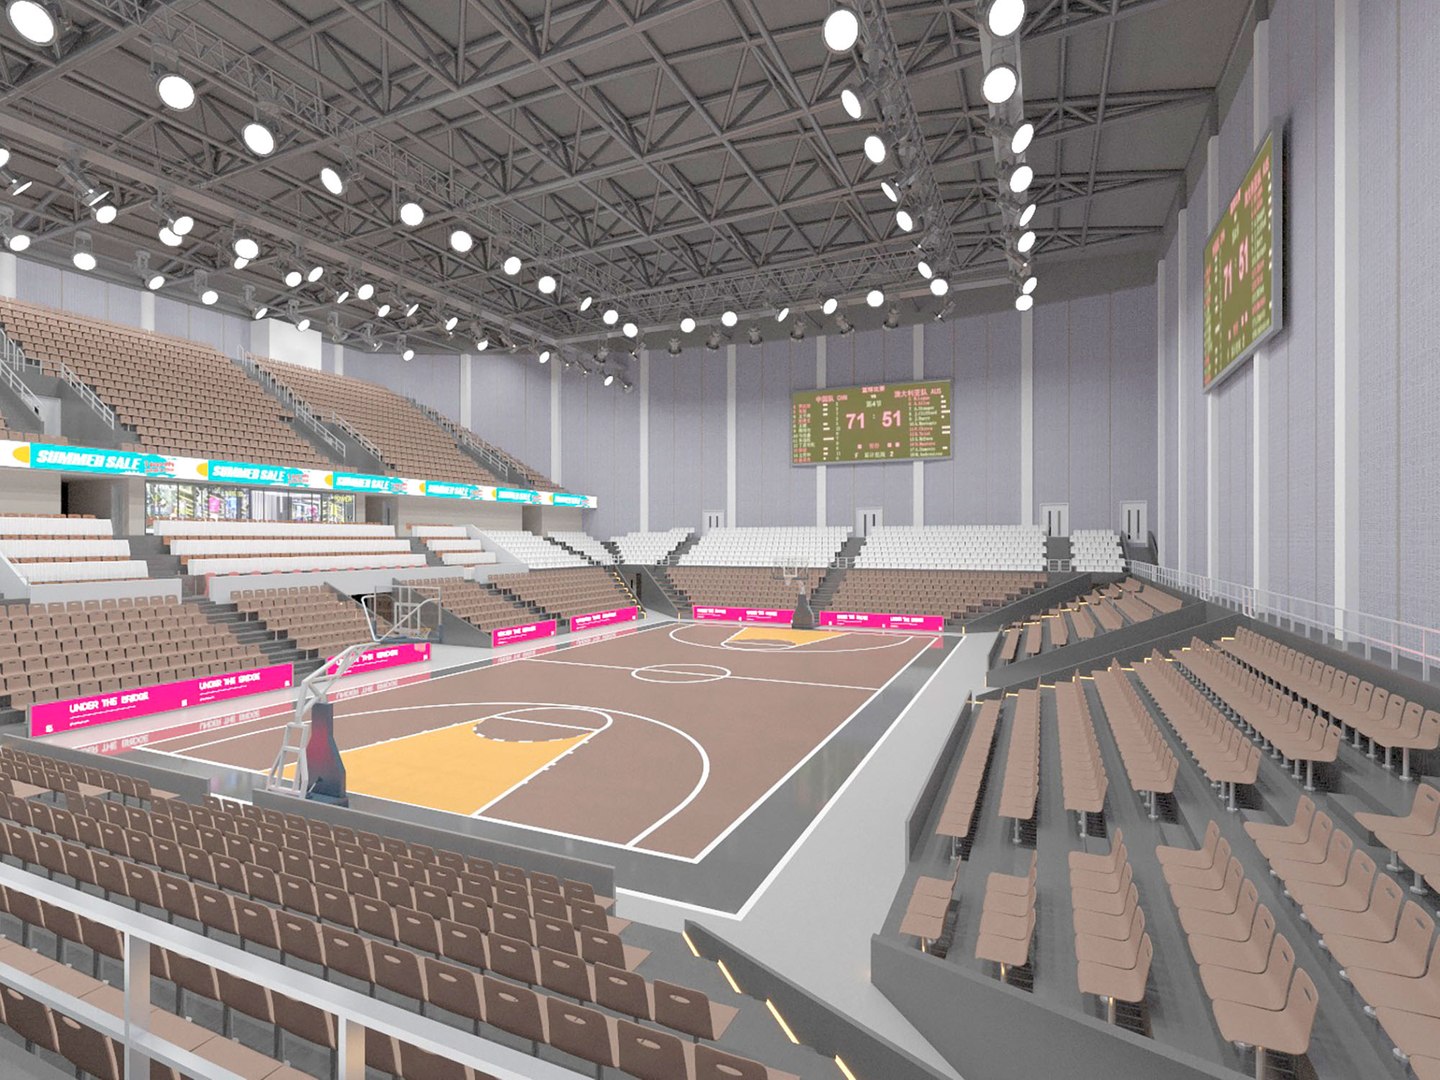 An indoor basketball court a basketball hall a stadium a stand model